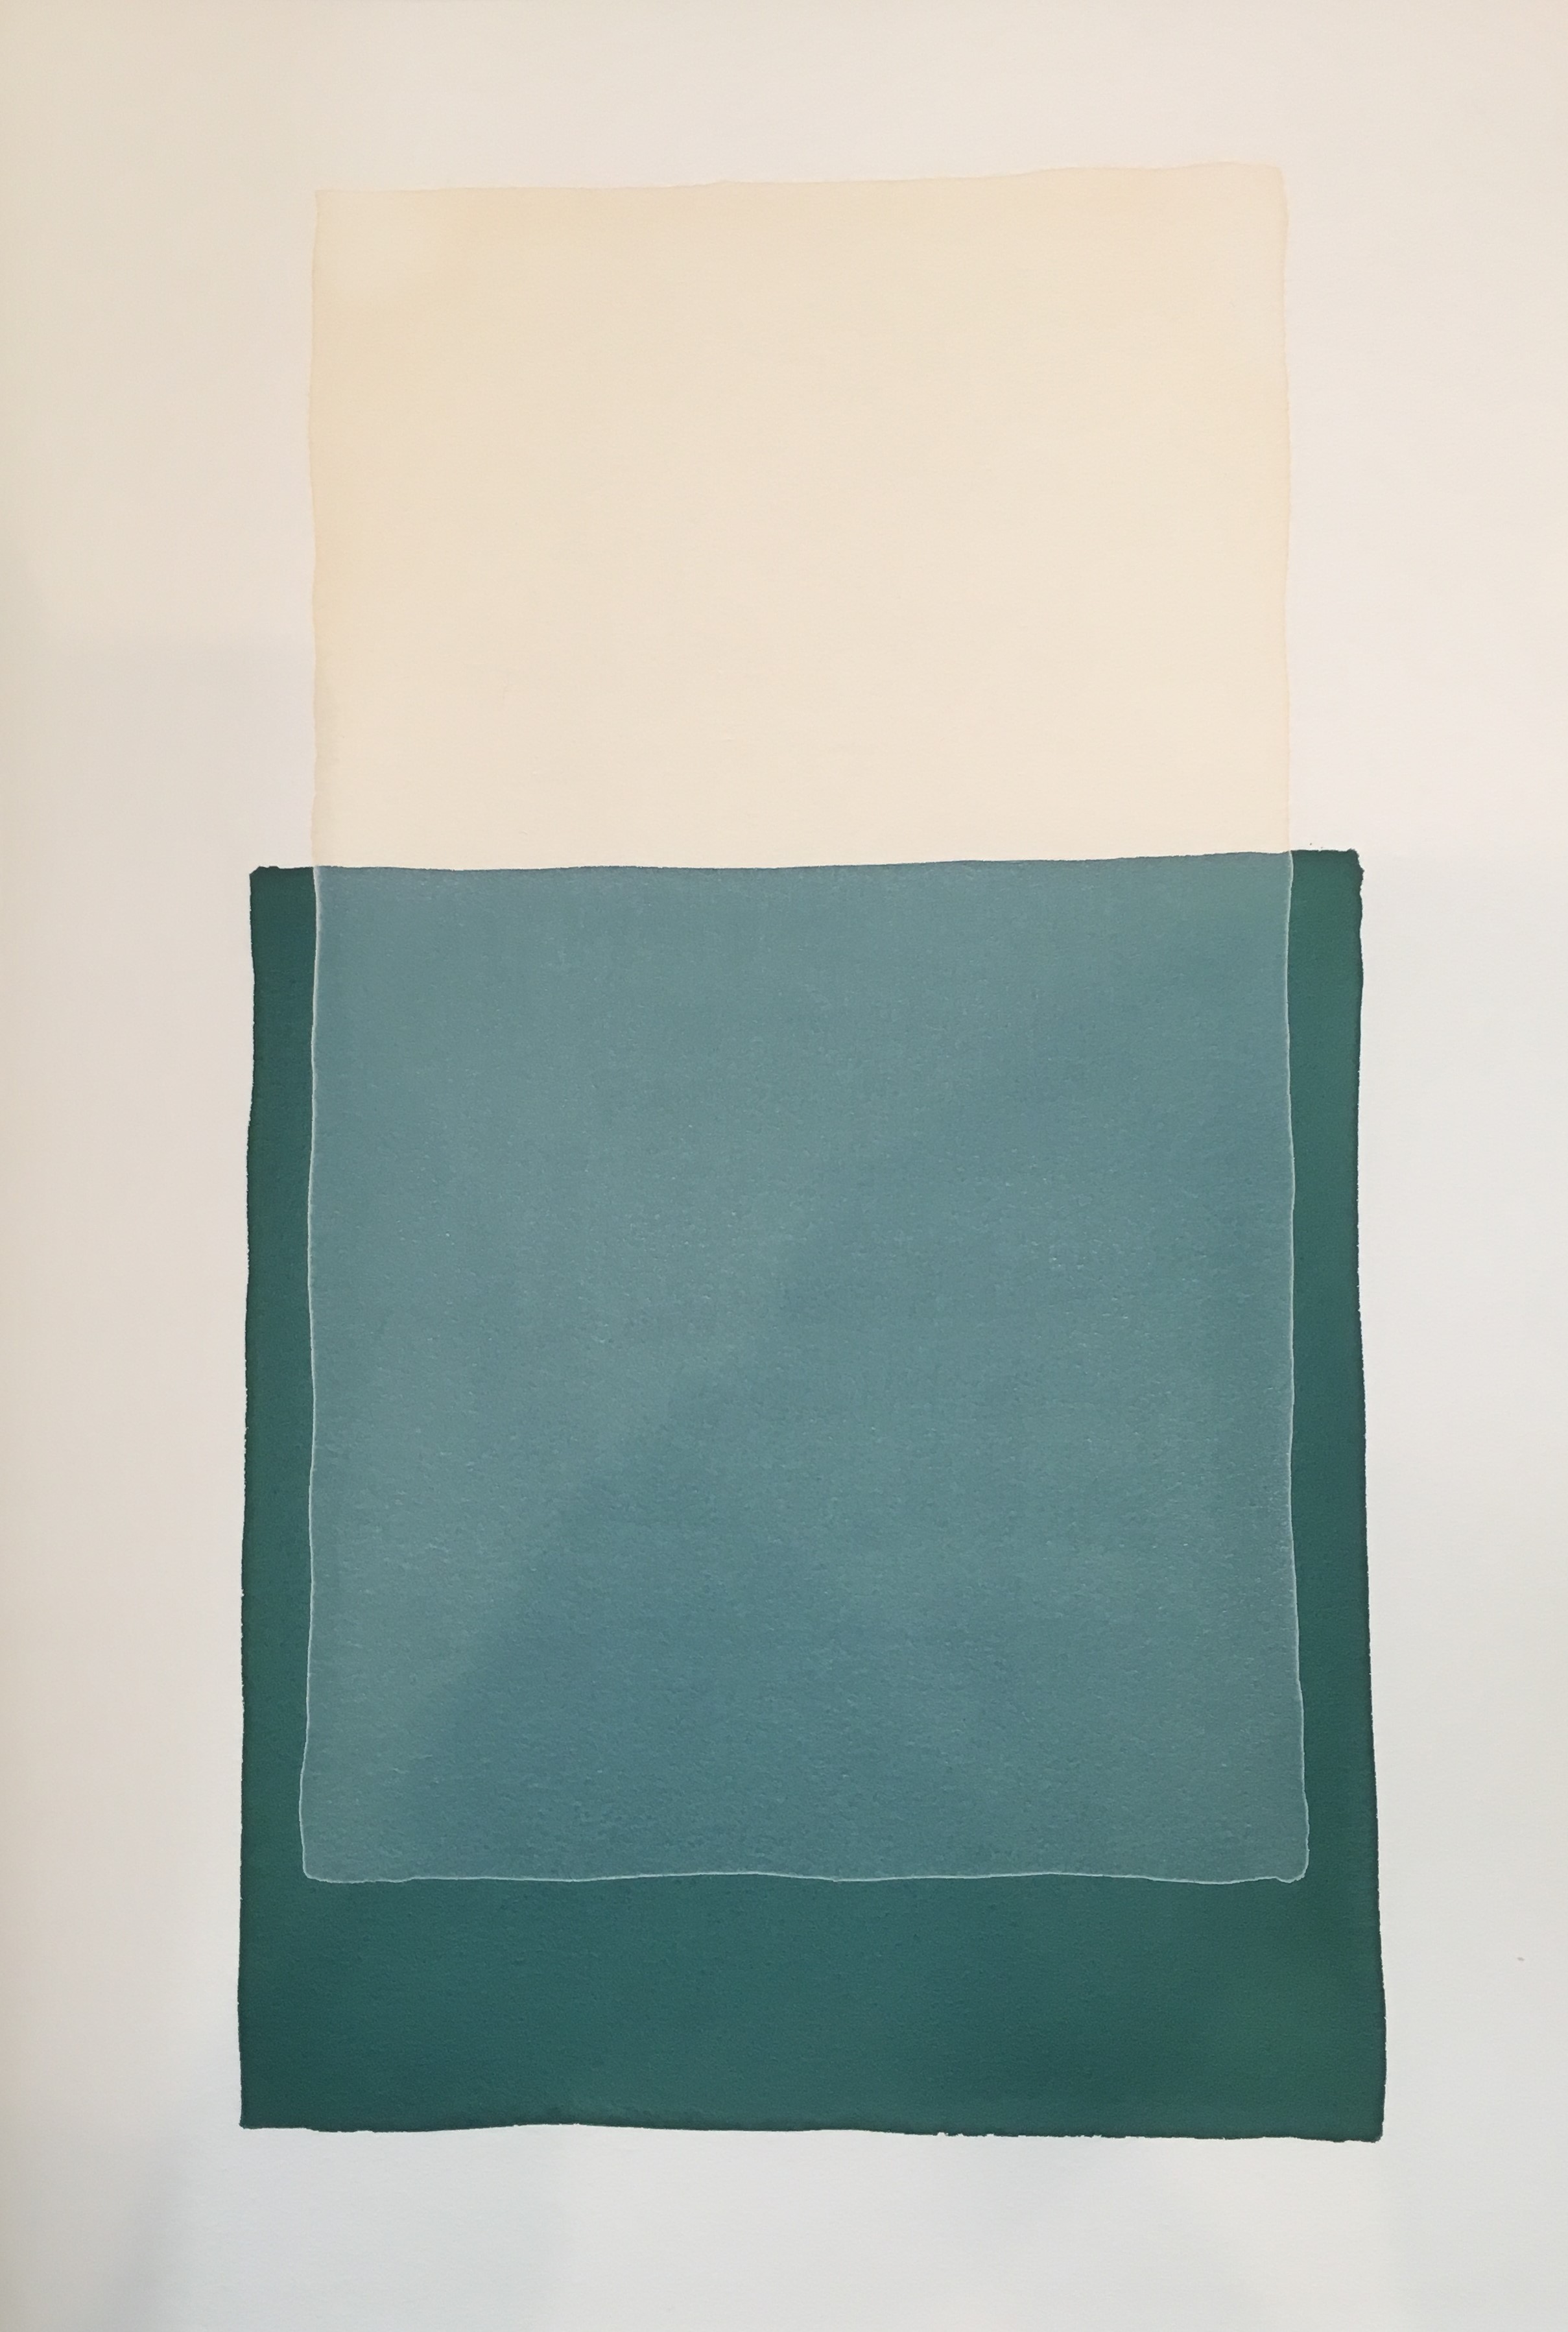 Werner Maier, "Farbräume", 2017, Aquarell auf Büttenpapier, 57 x 38 cm